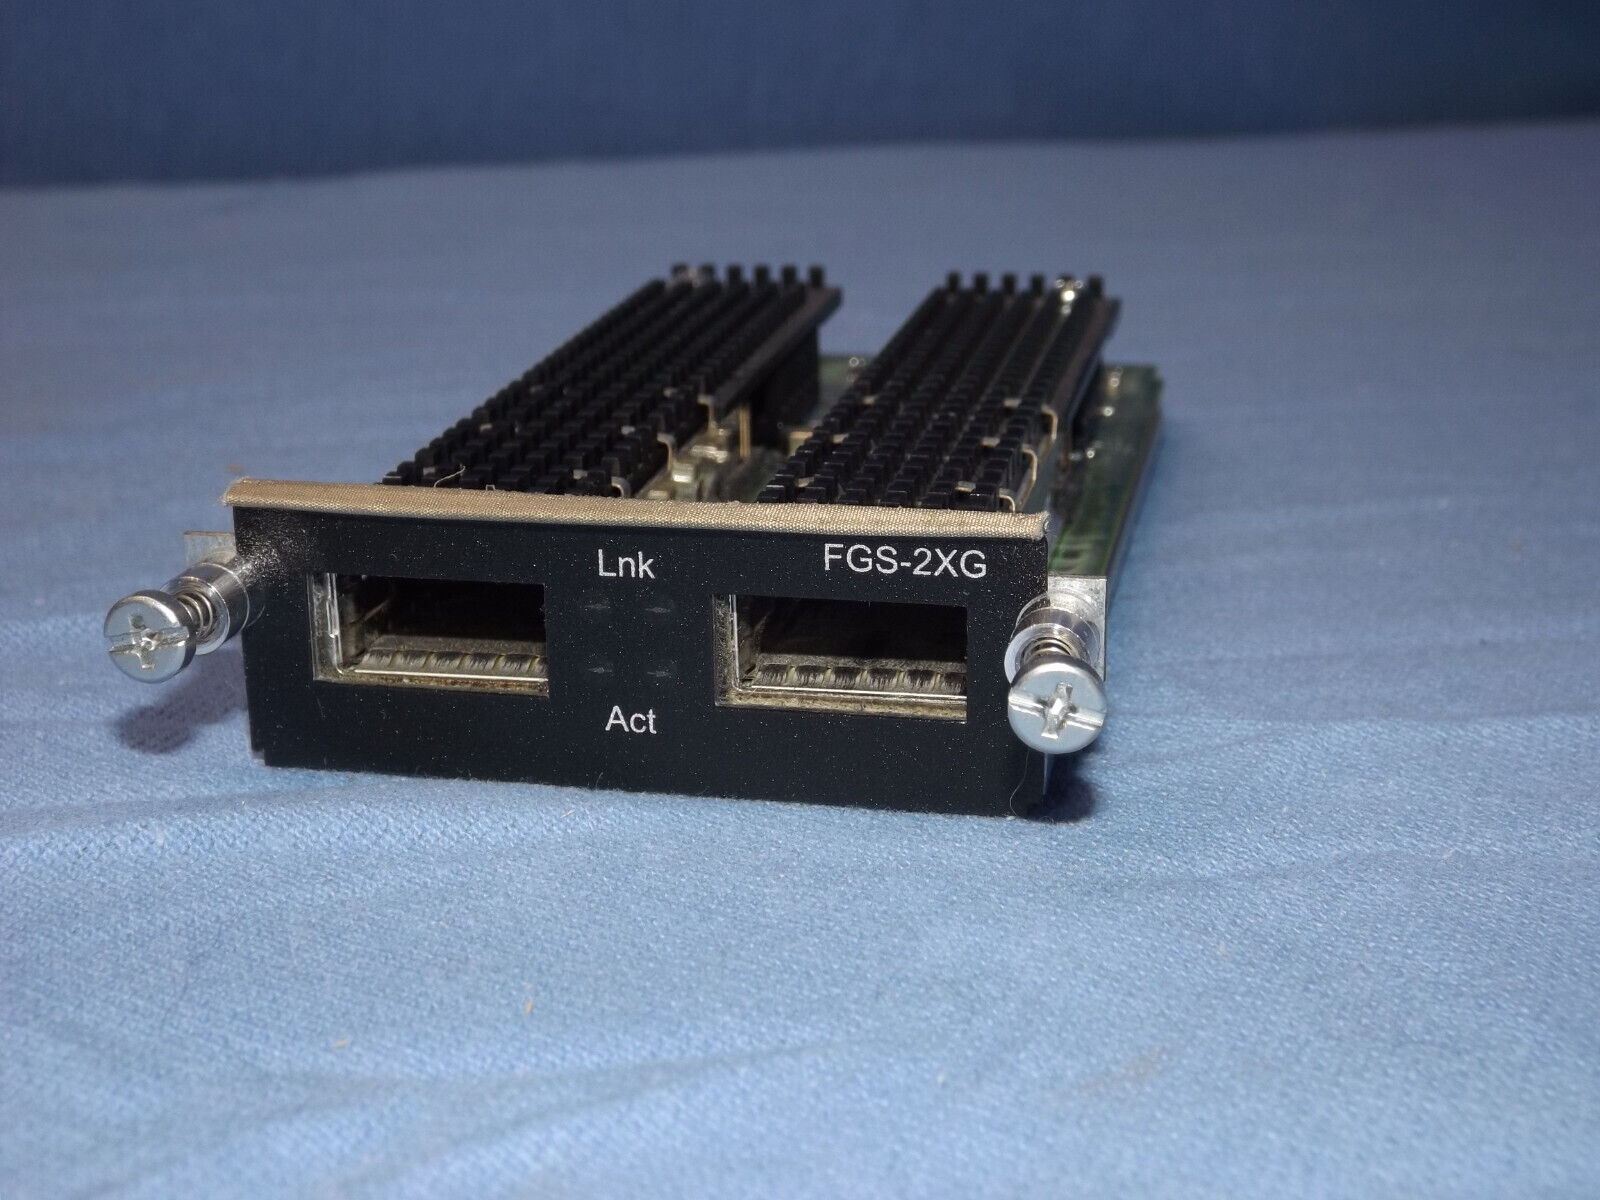 Foundry FastIron Brocade XFP 10gbs Module FGS-2XG 2-Port (A0606)